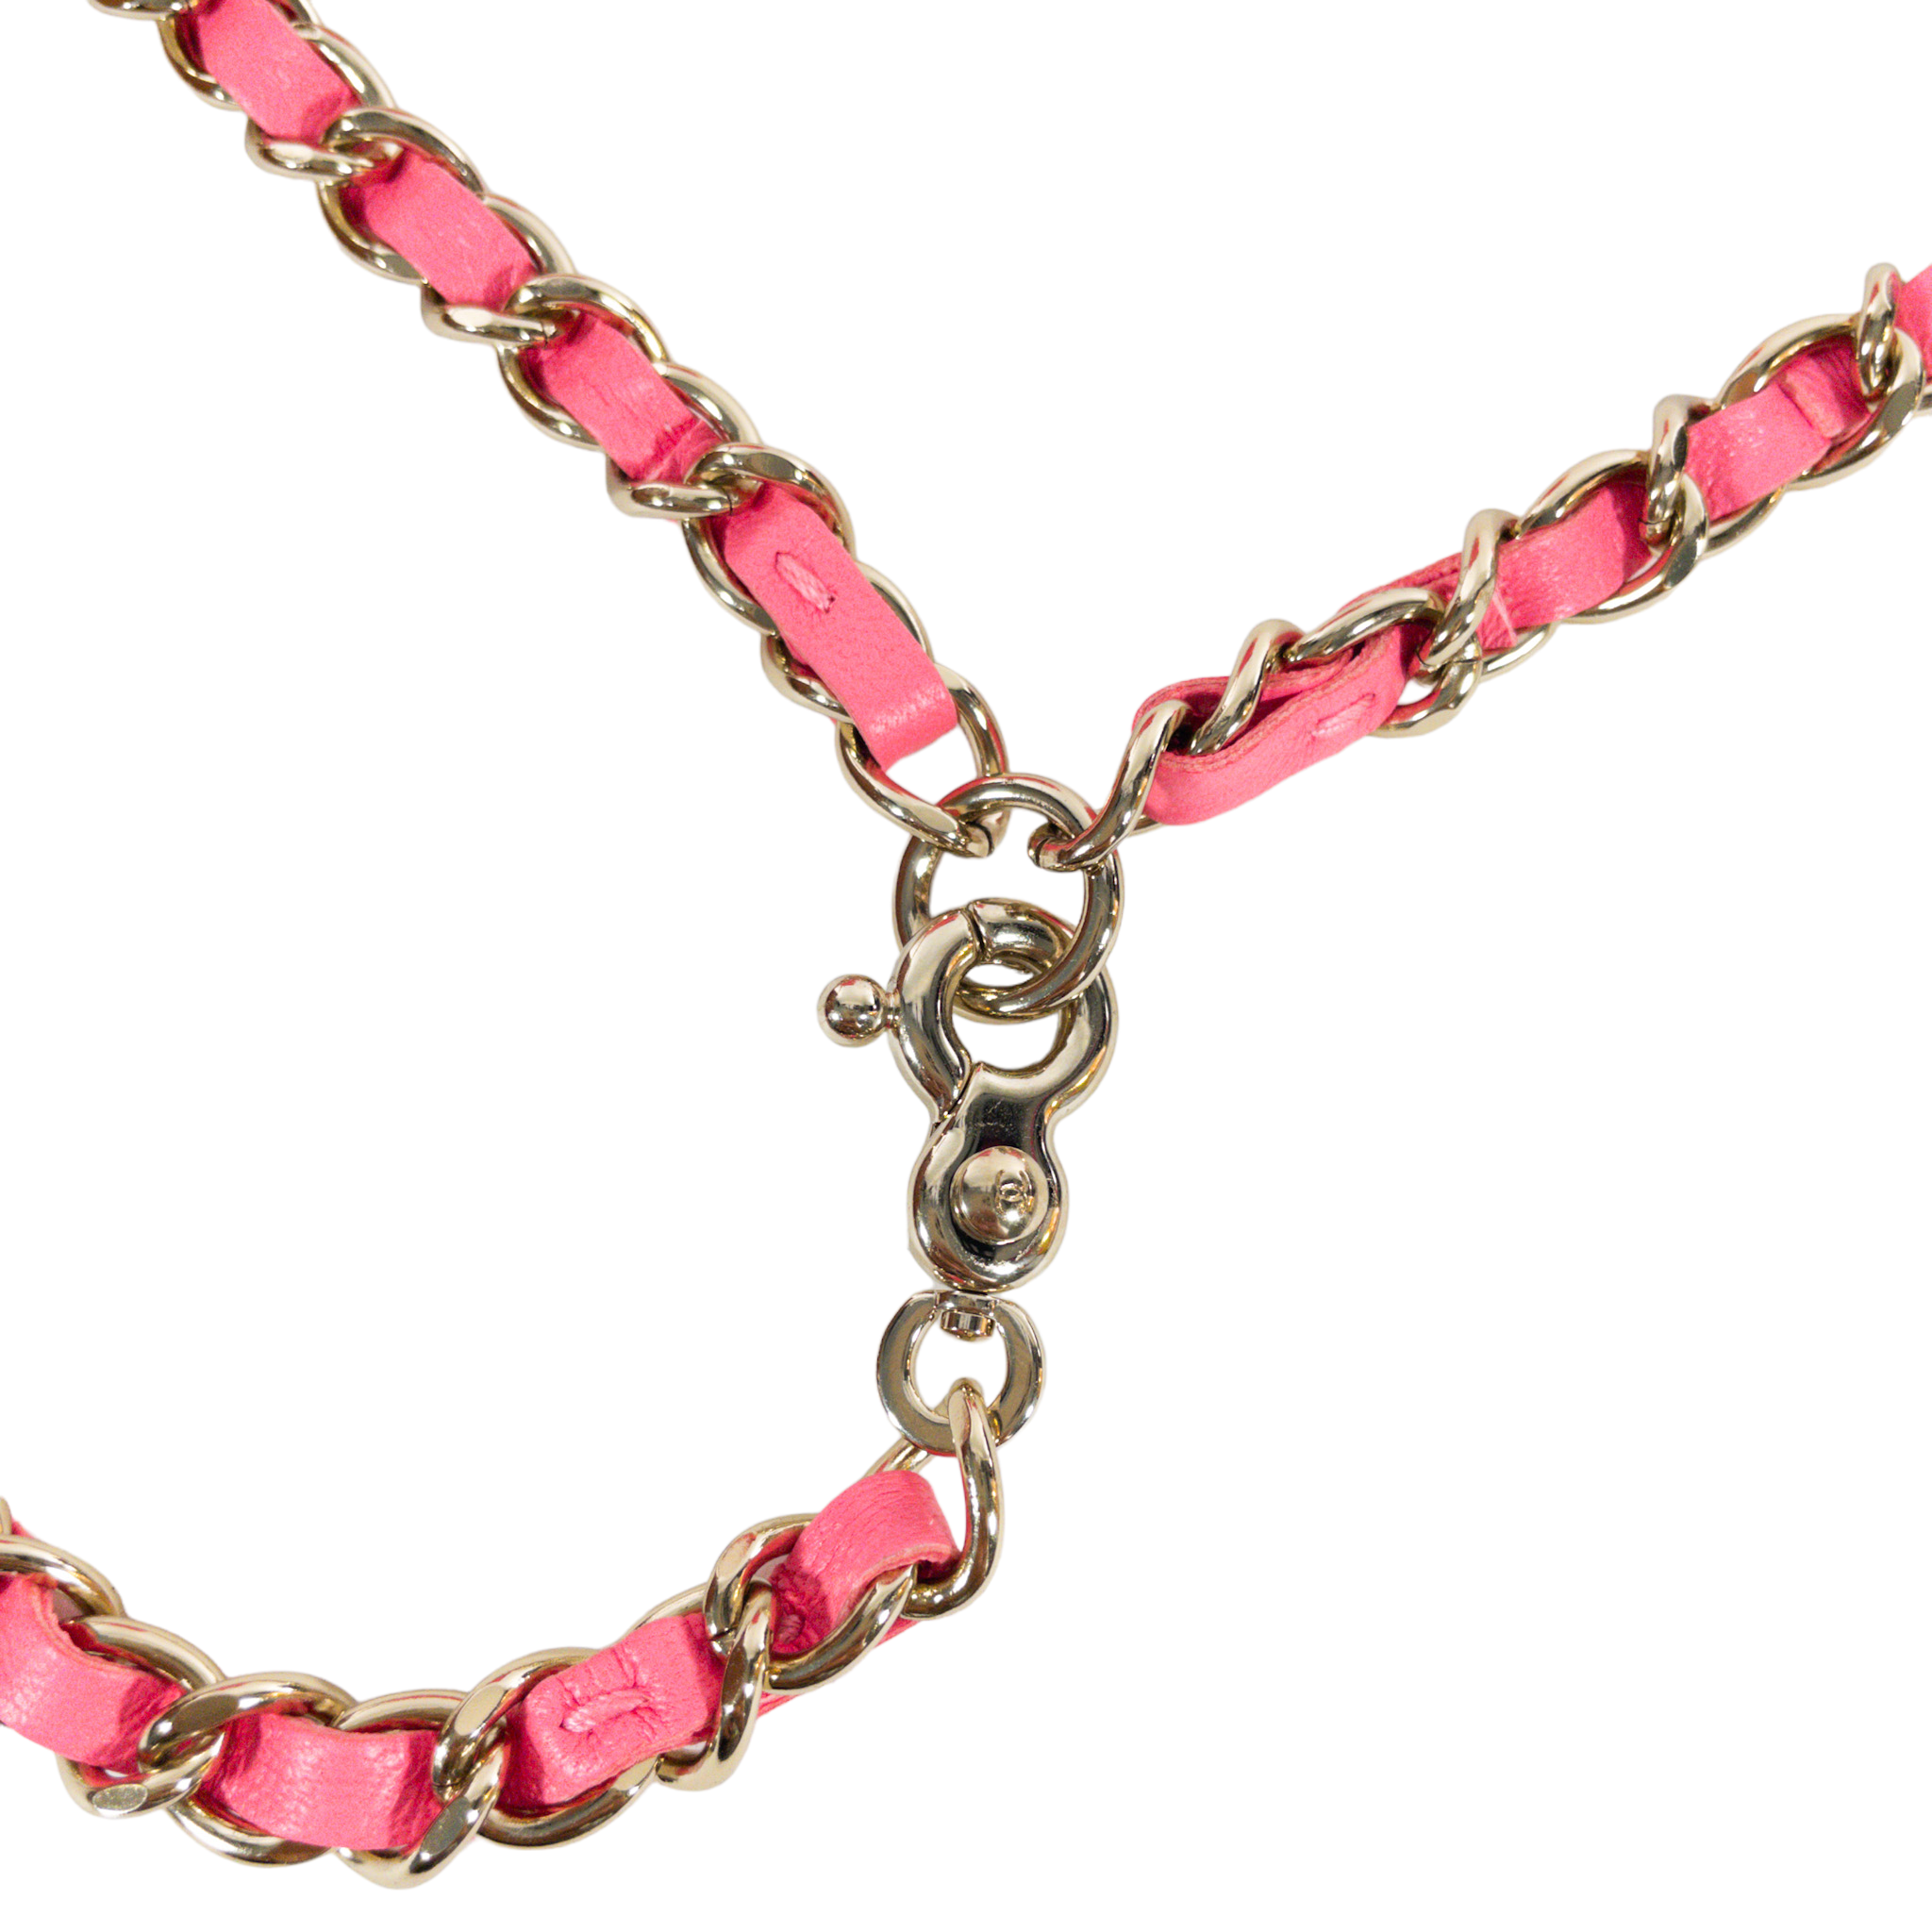 Chanel Pink Quilted Lambskin Heart Belt Bag, myGemma